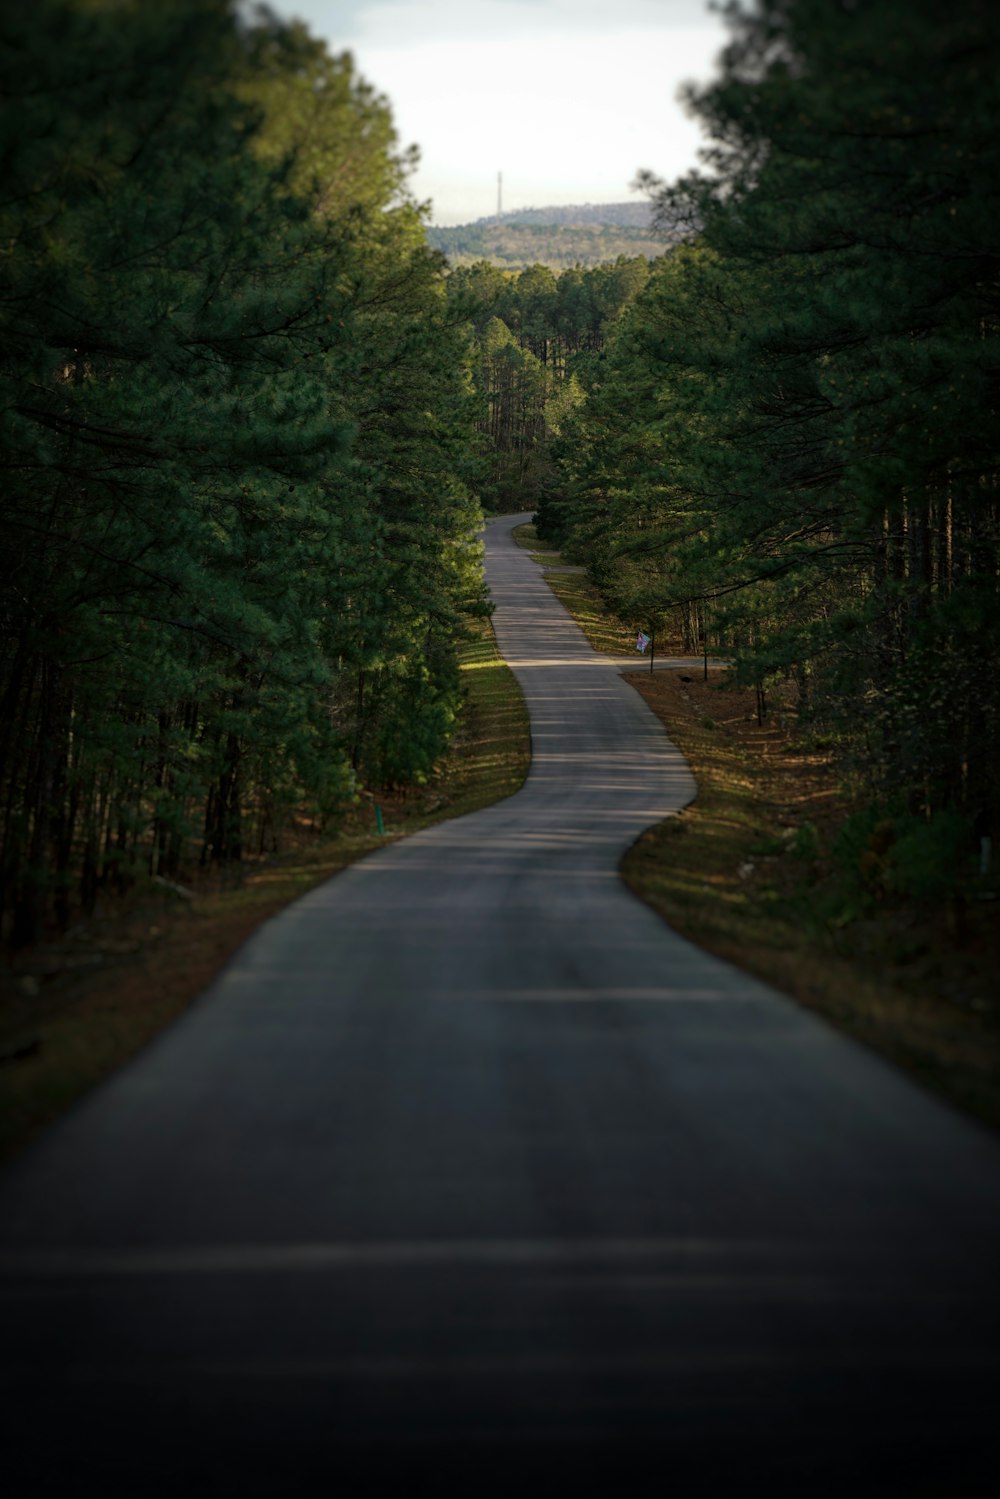 grey asphalt road between trees during daytime